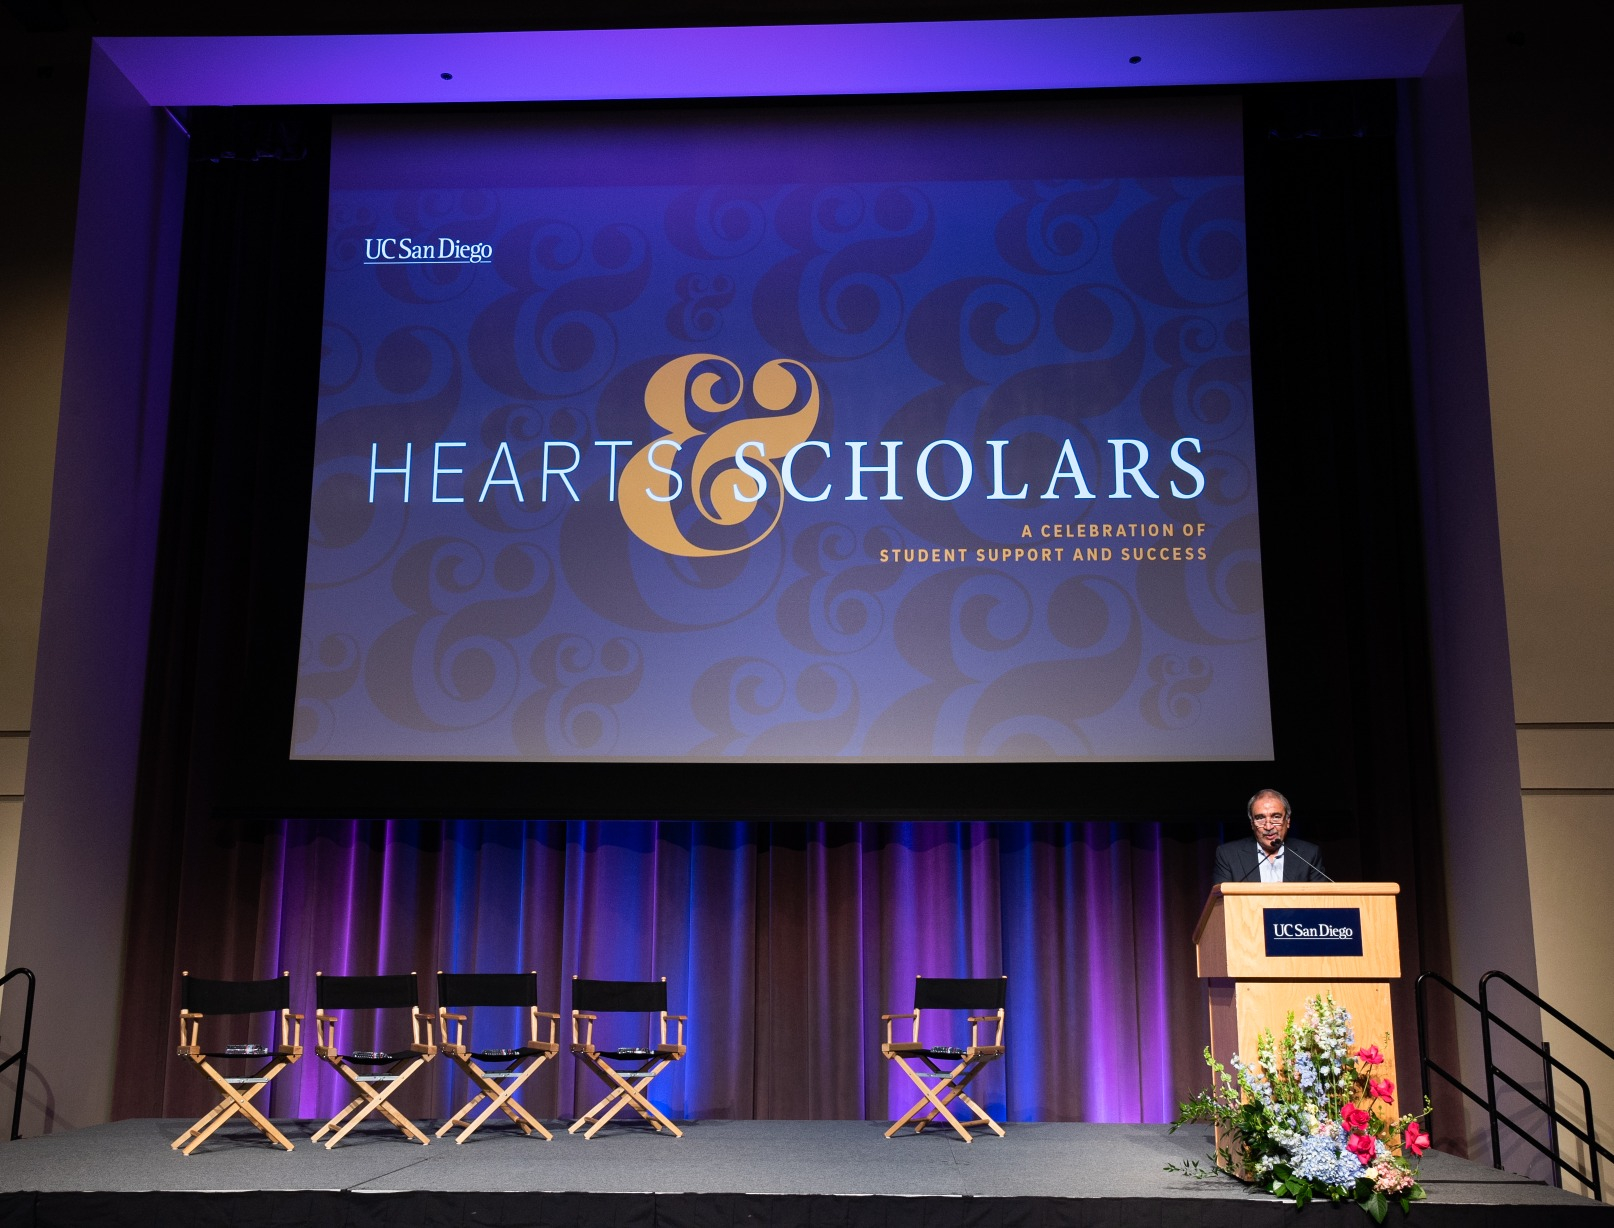 Chancellor Pradeep Khosla on stage at Hearts & Scholars event